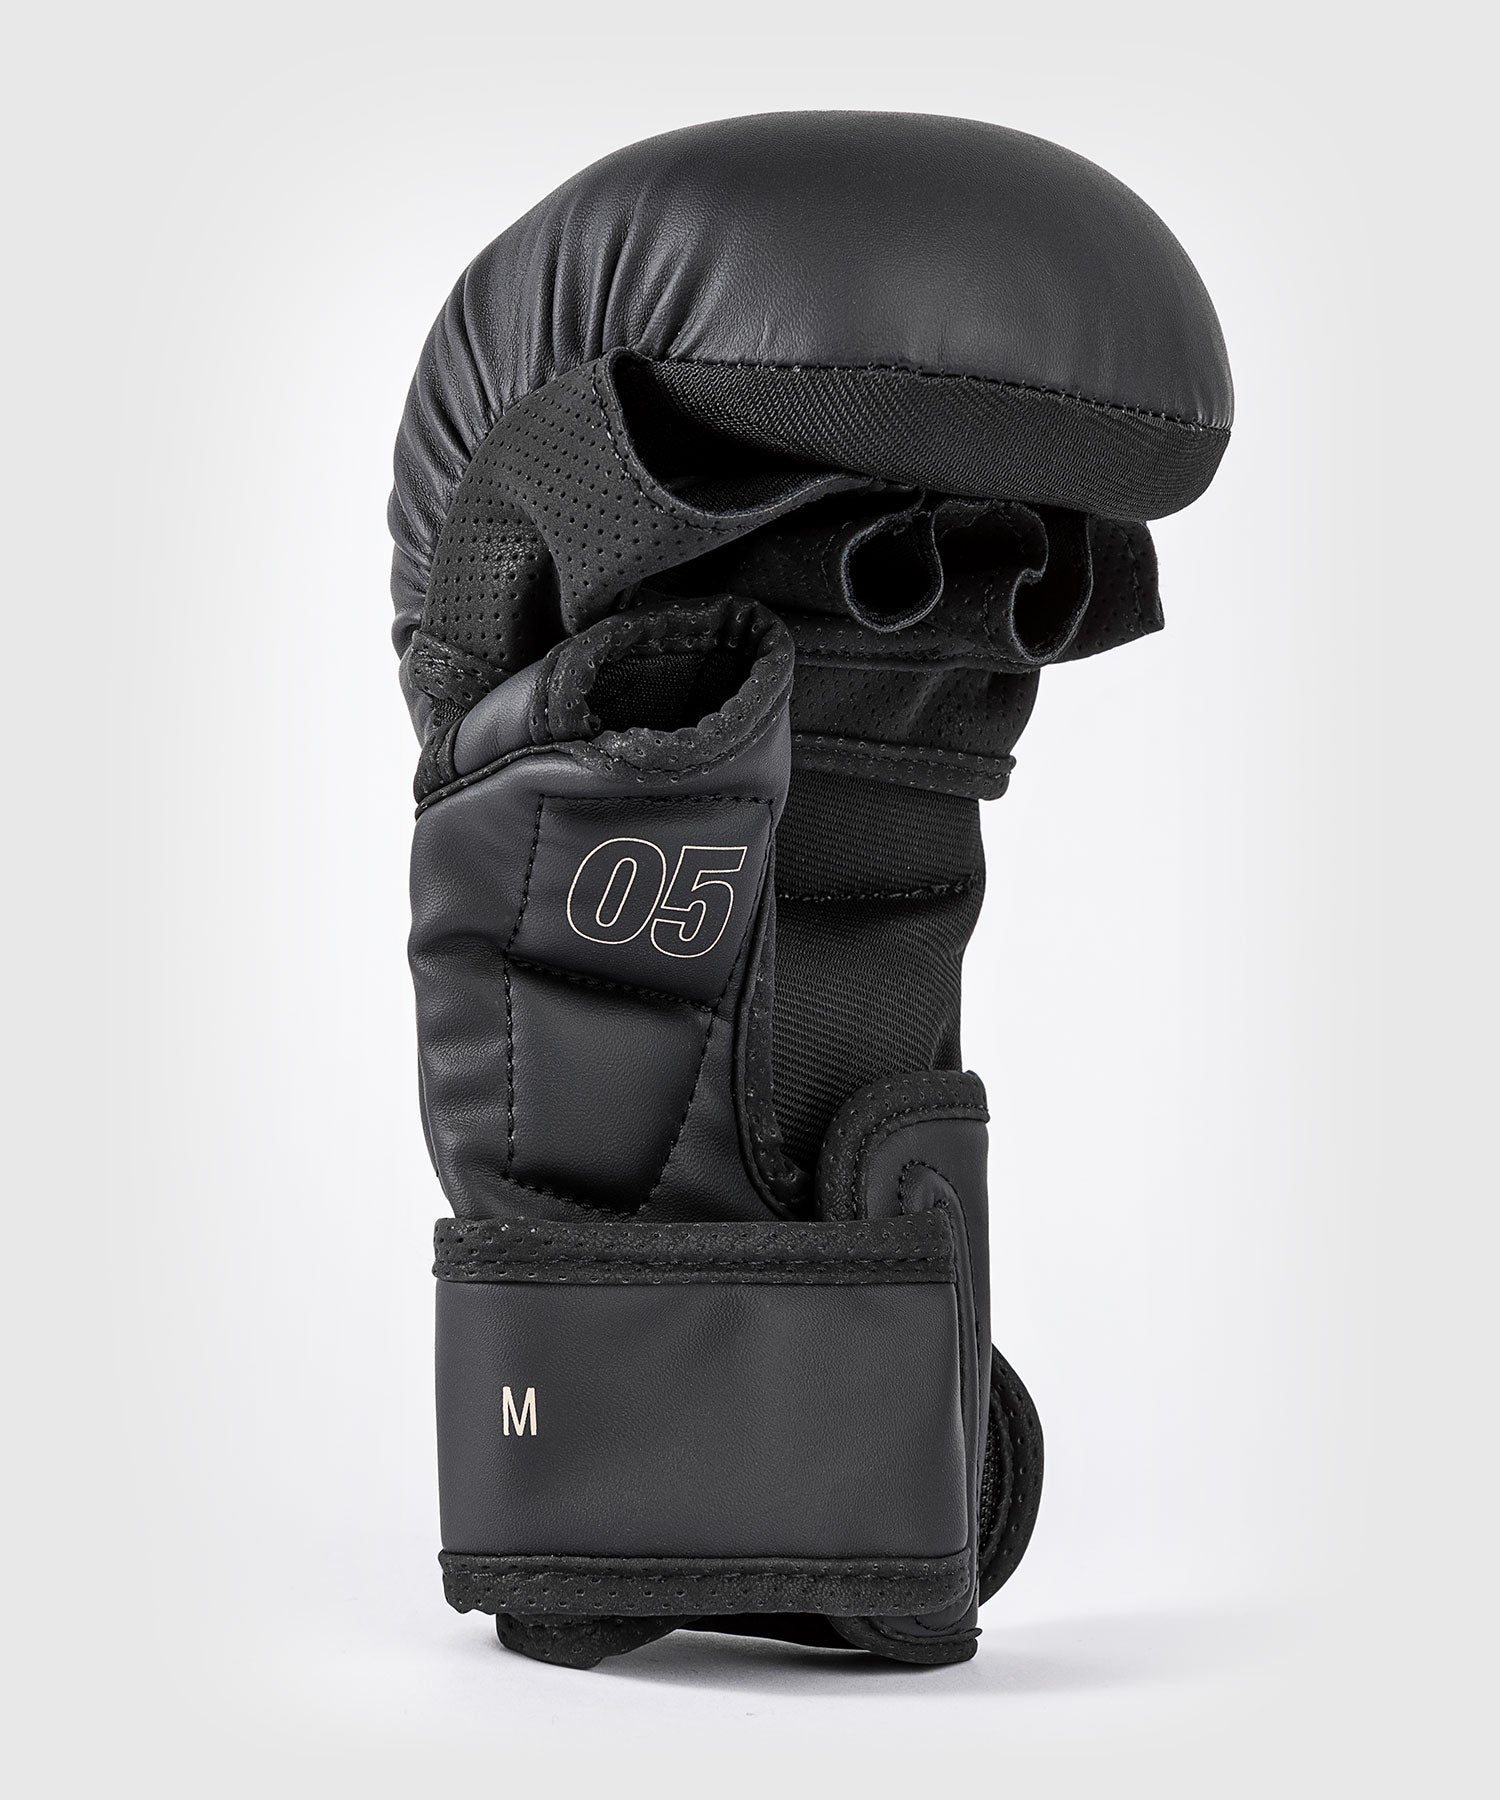 MMA Gloves – Venum Europe